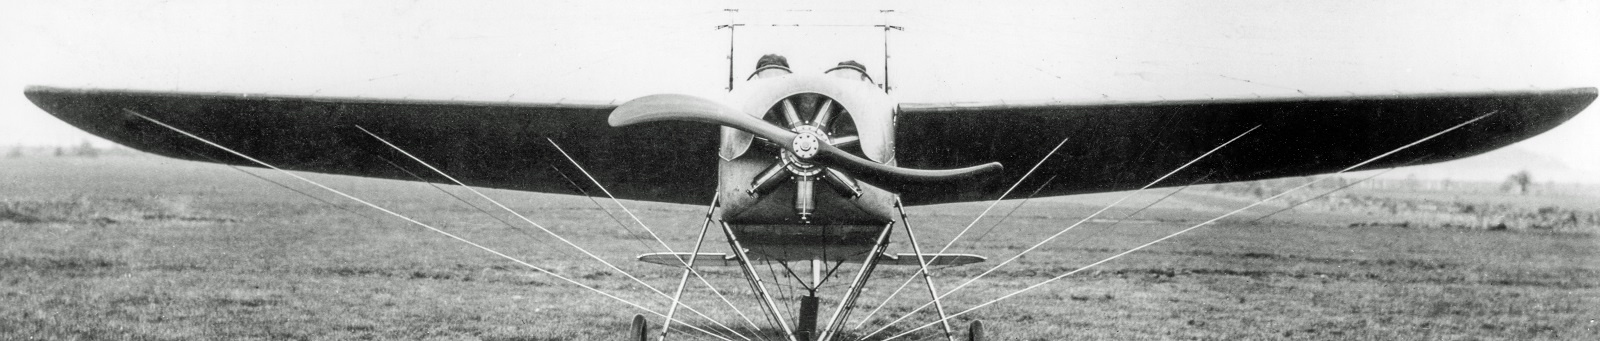 Vickers No 6 Monoplane